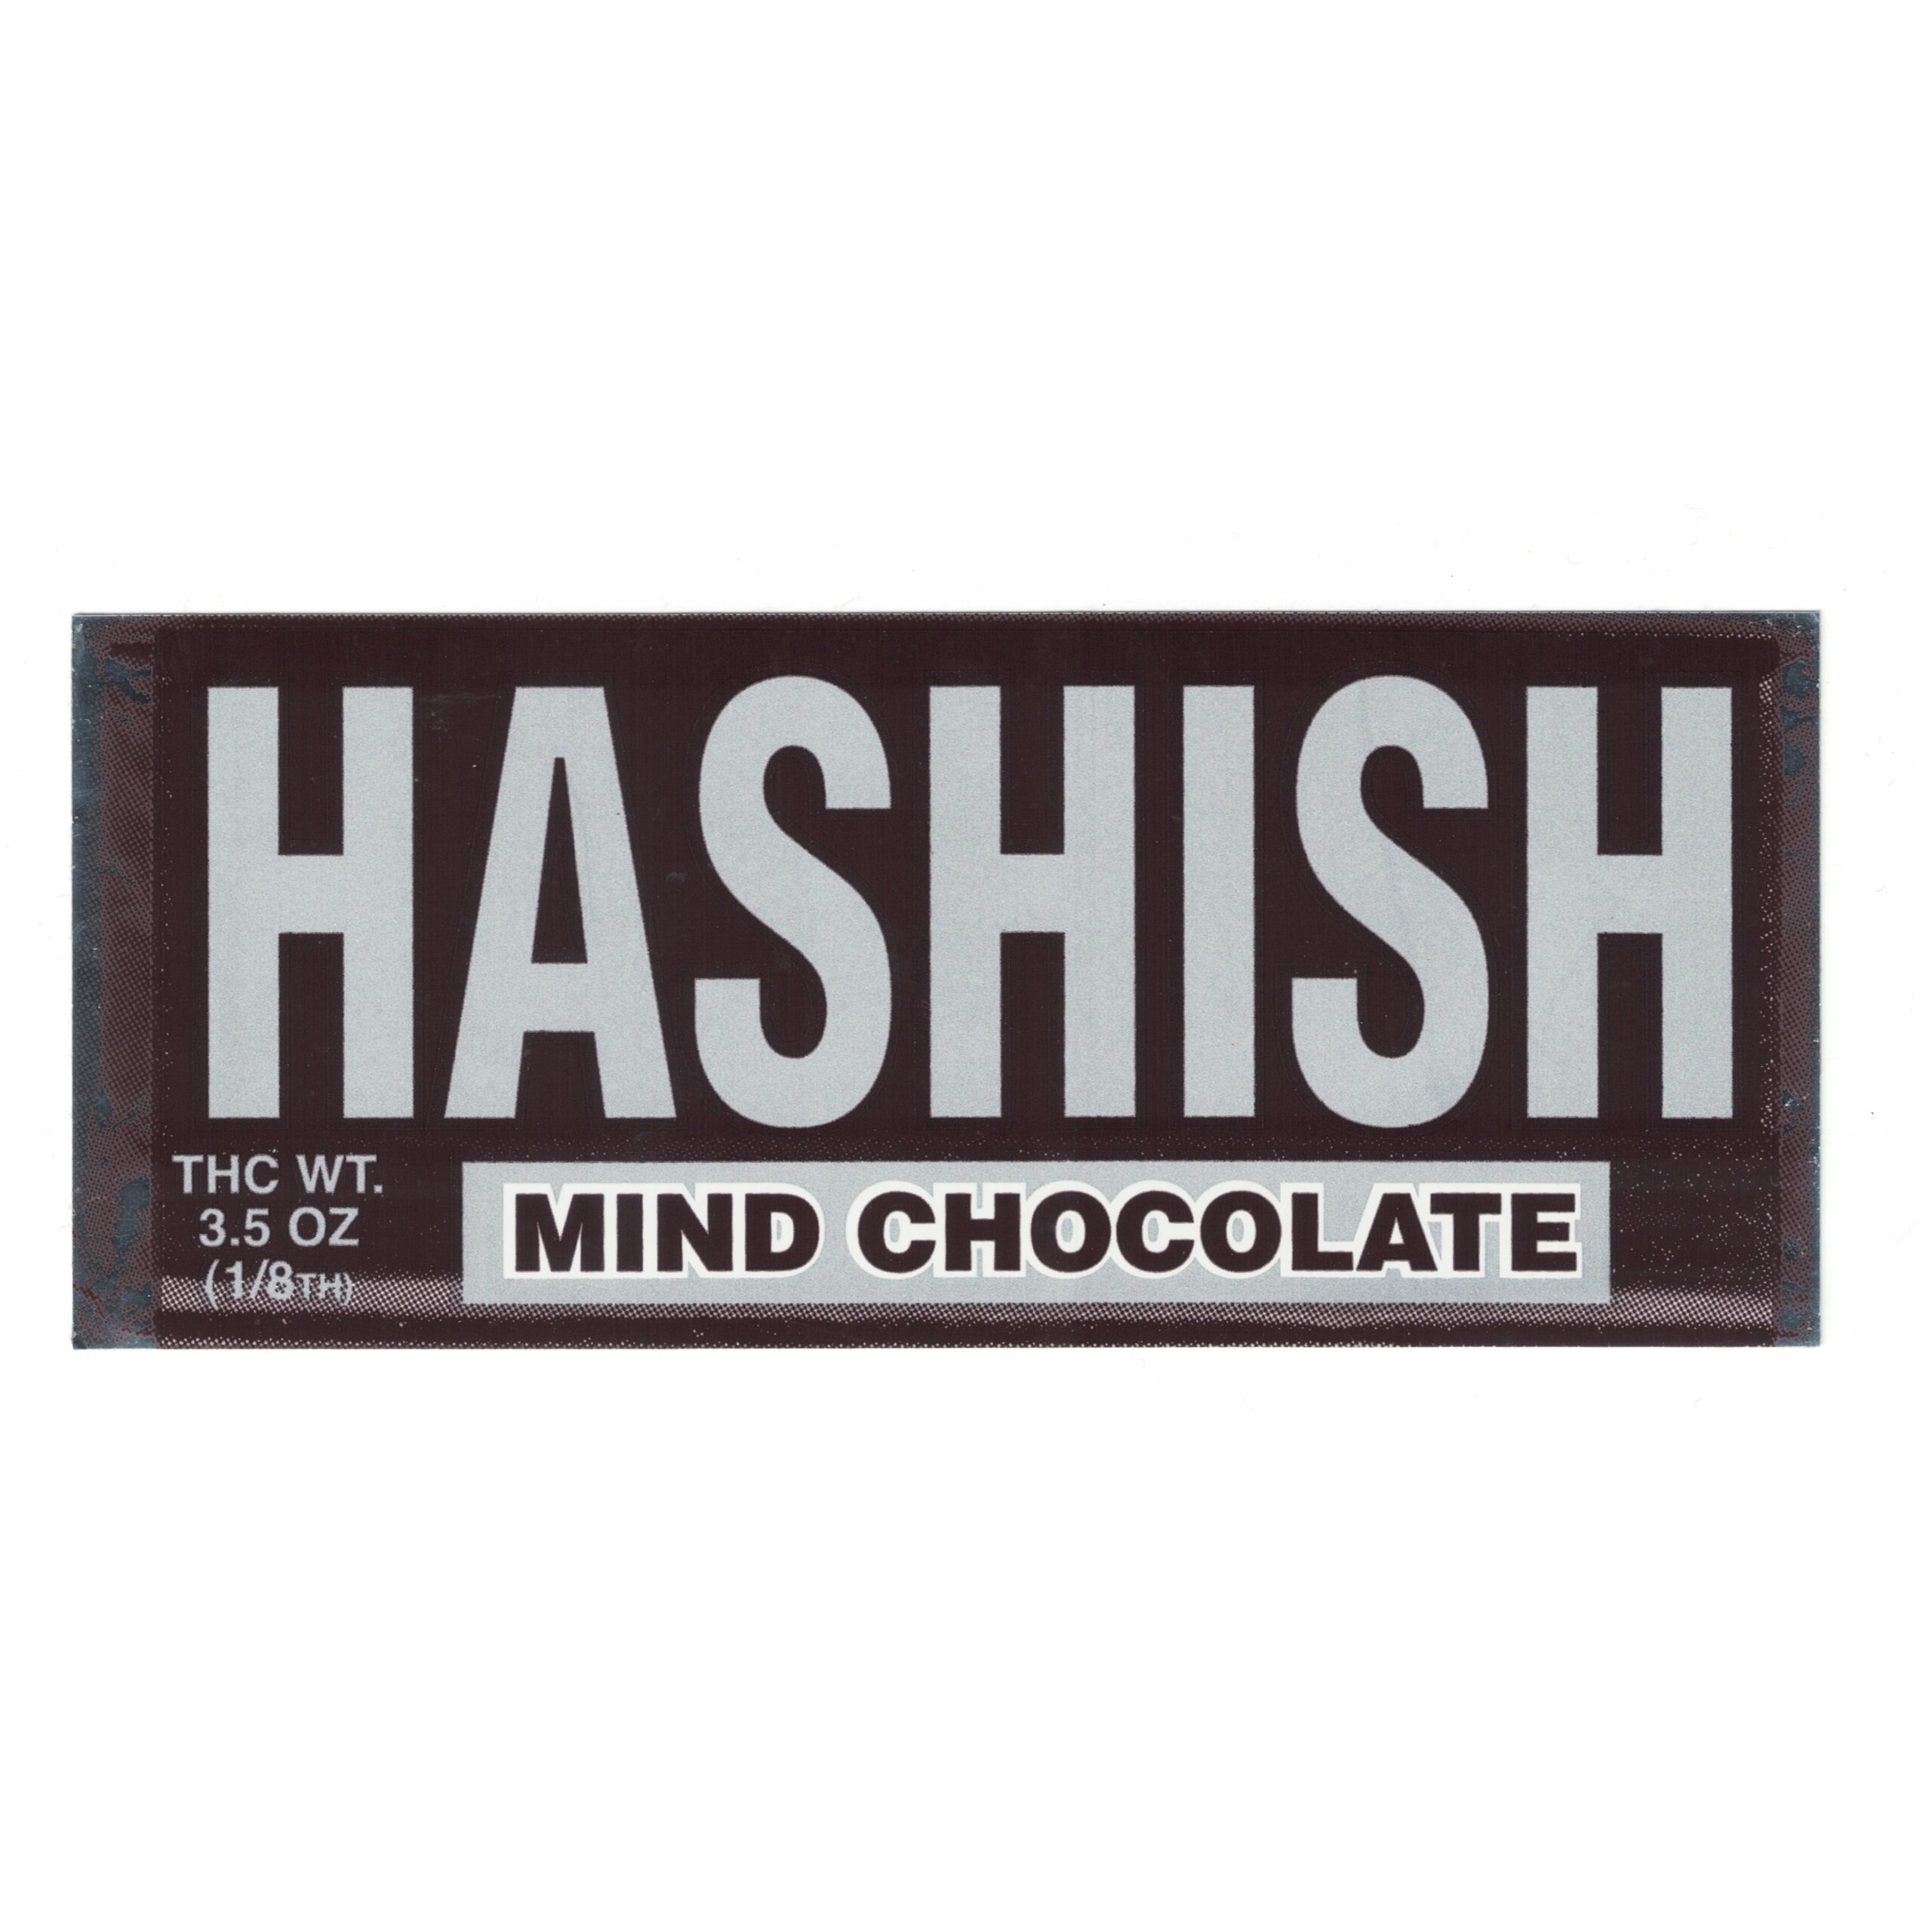 THC Hershey Hashish Mind Chocolate Reflective